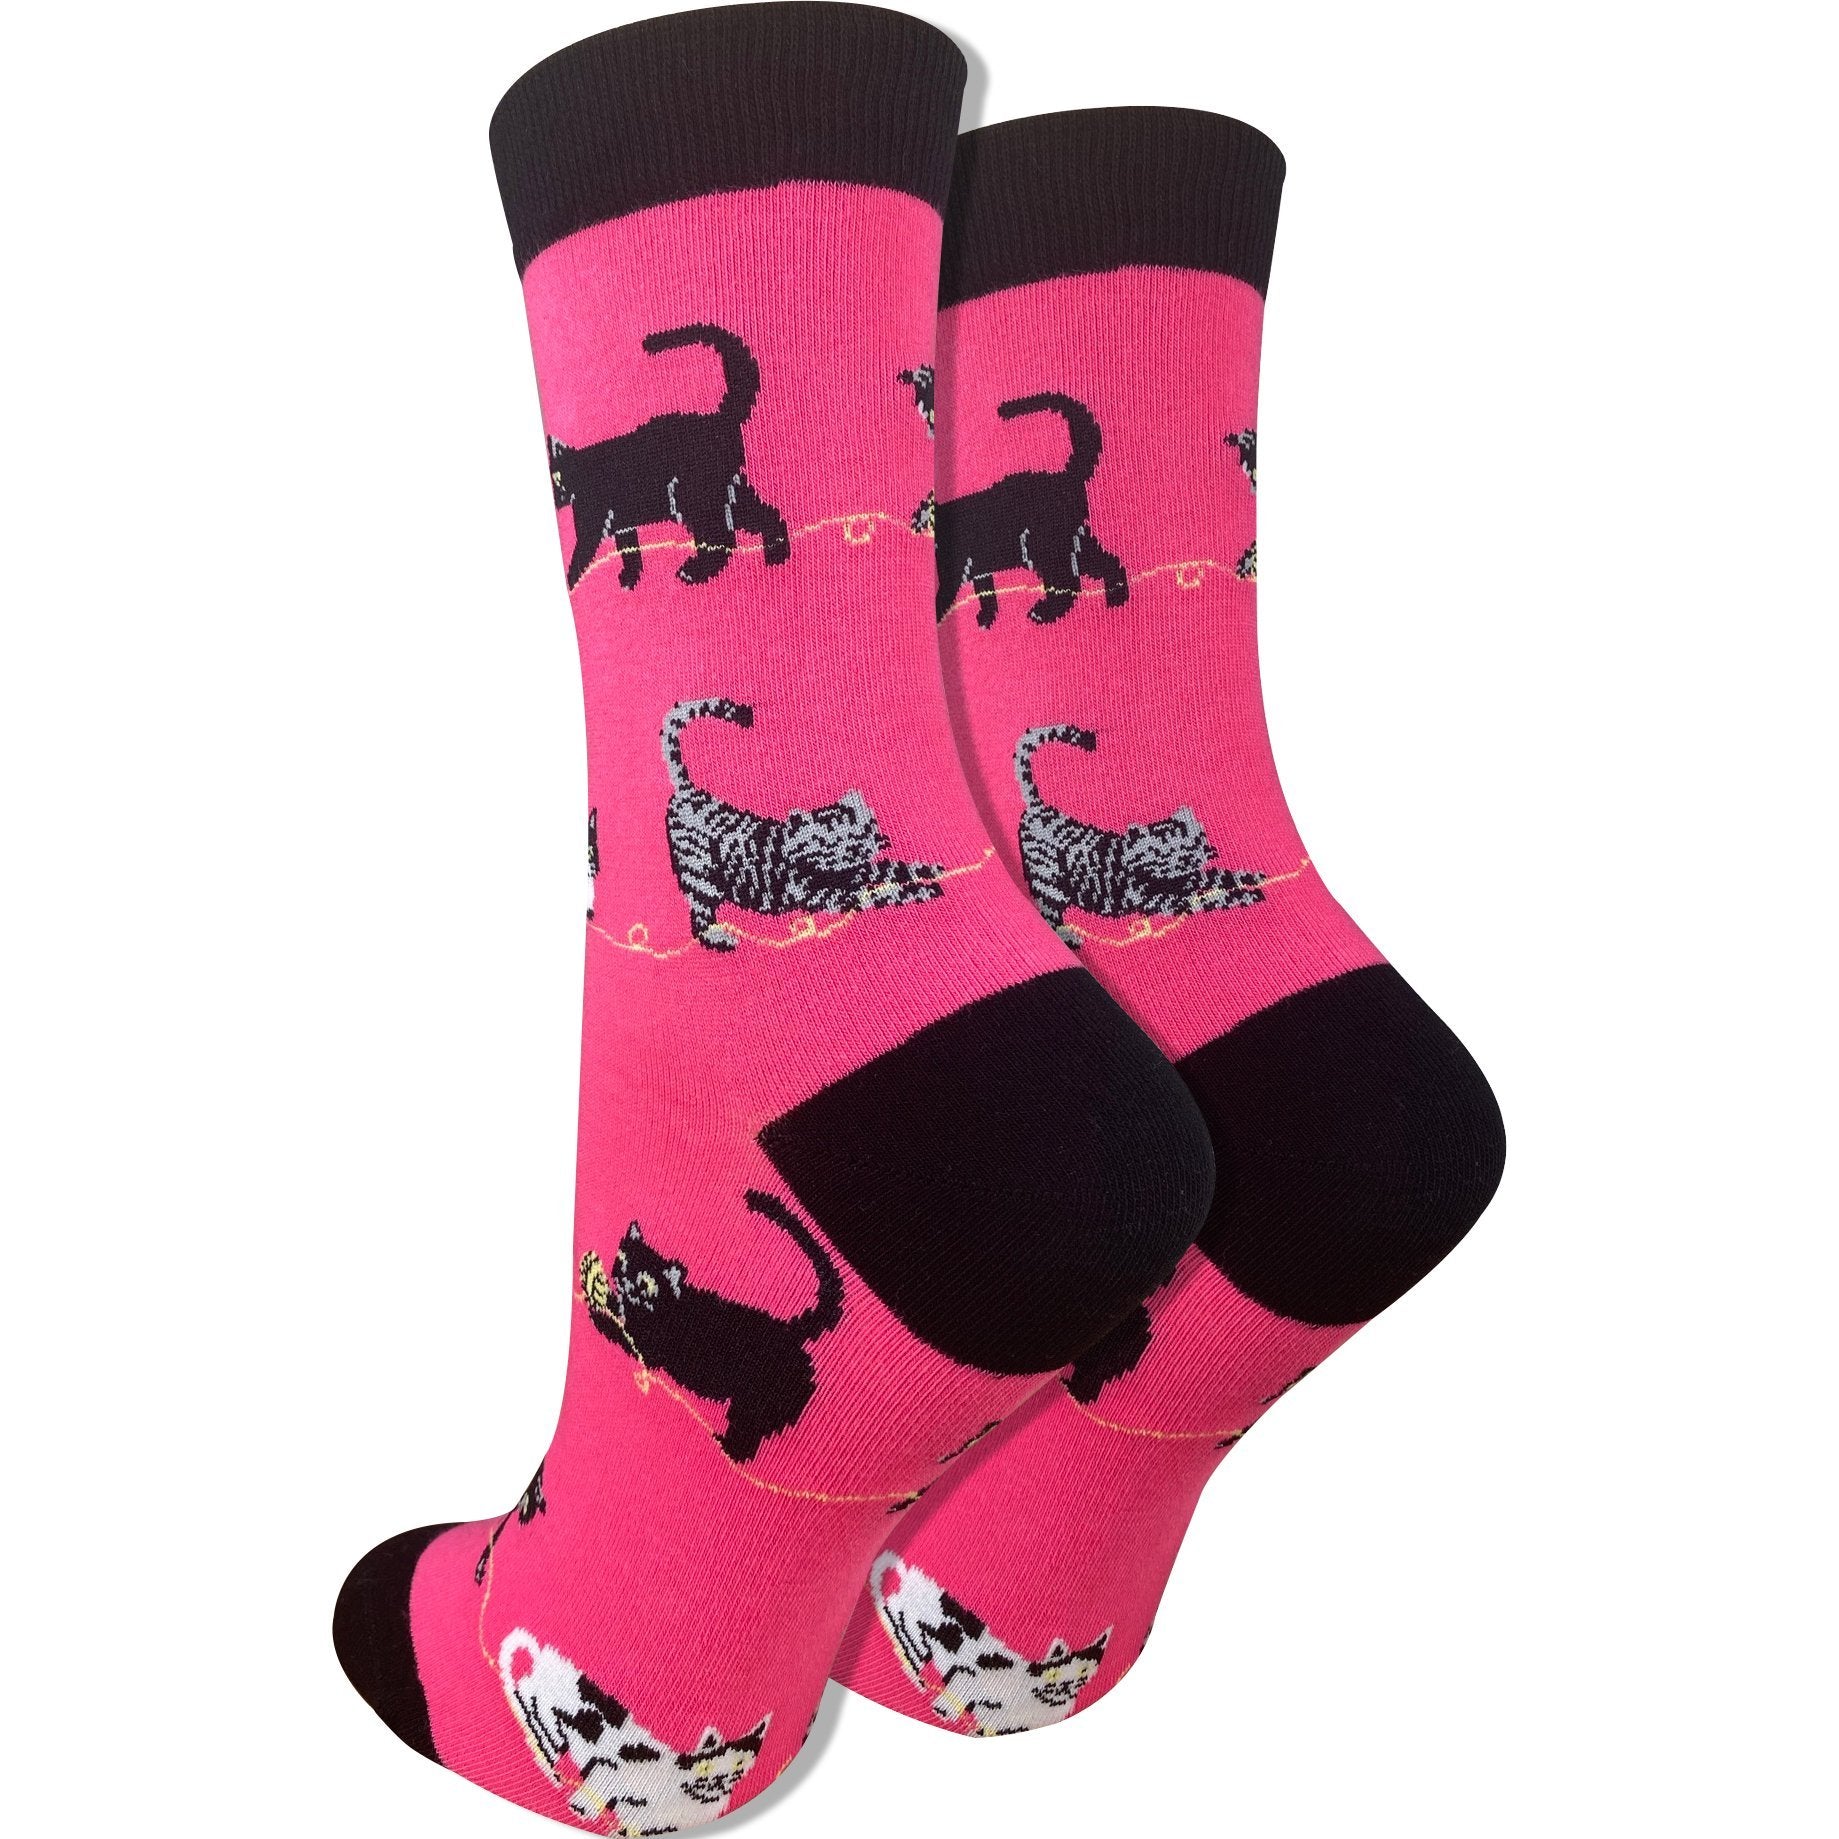 2 Pairs Random Cotton Cartoon Socks Pink Cute Cat Ankle Socks Red